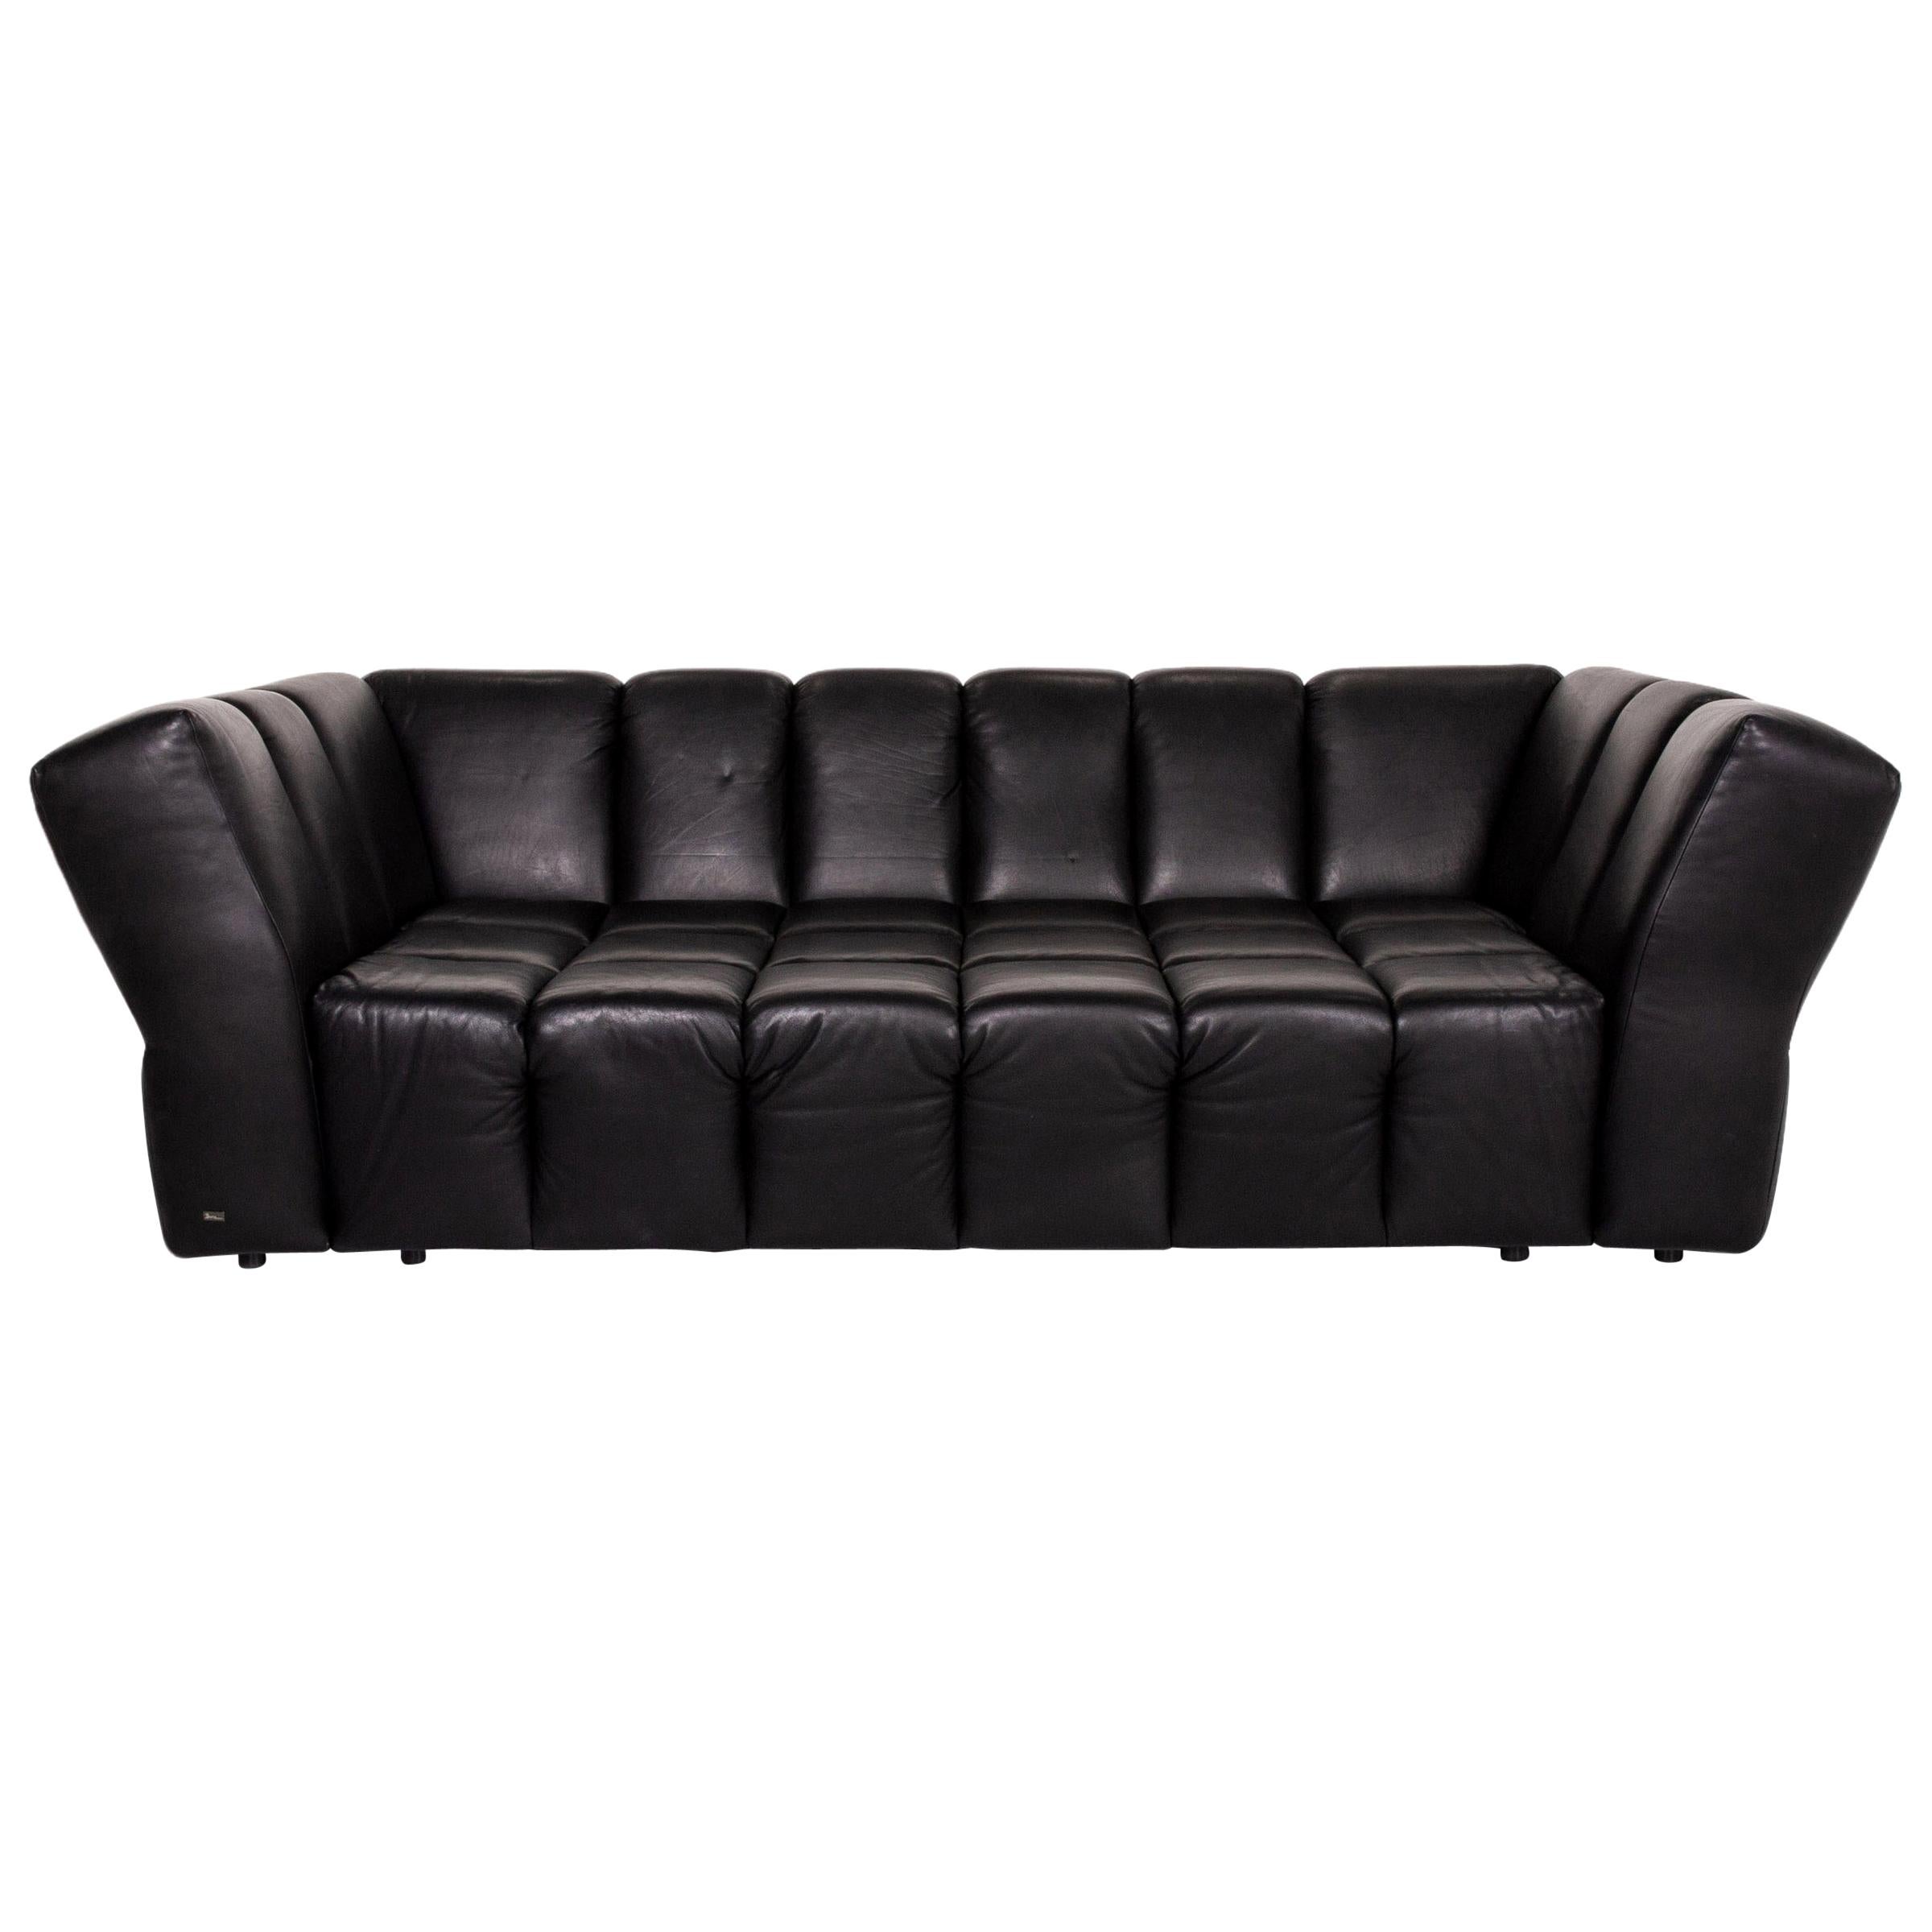 Bretz Chocolat Leather Sofa Black Four-Seat Couch